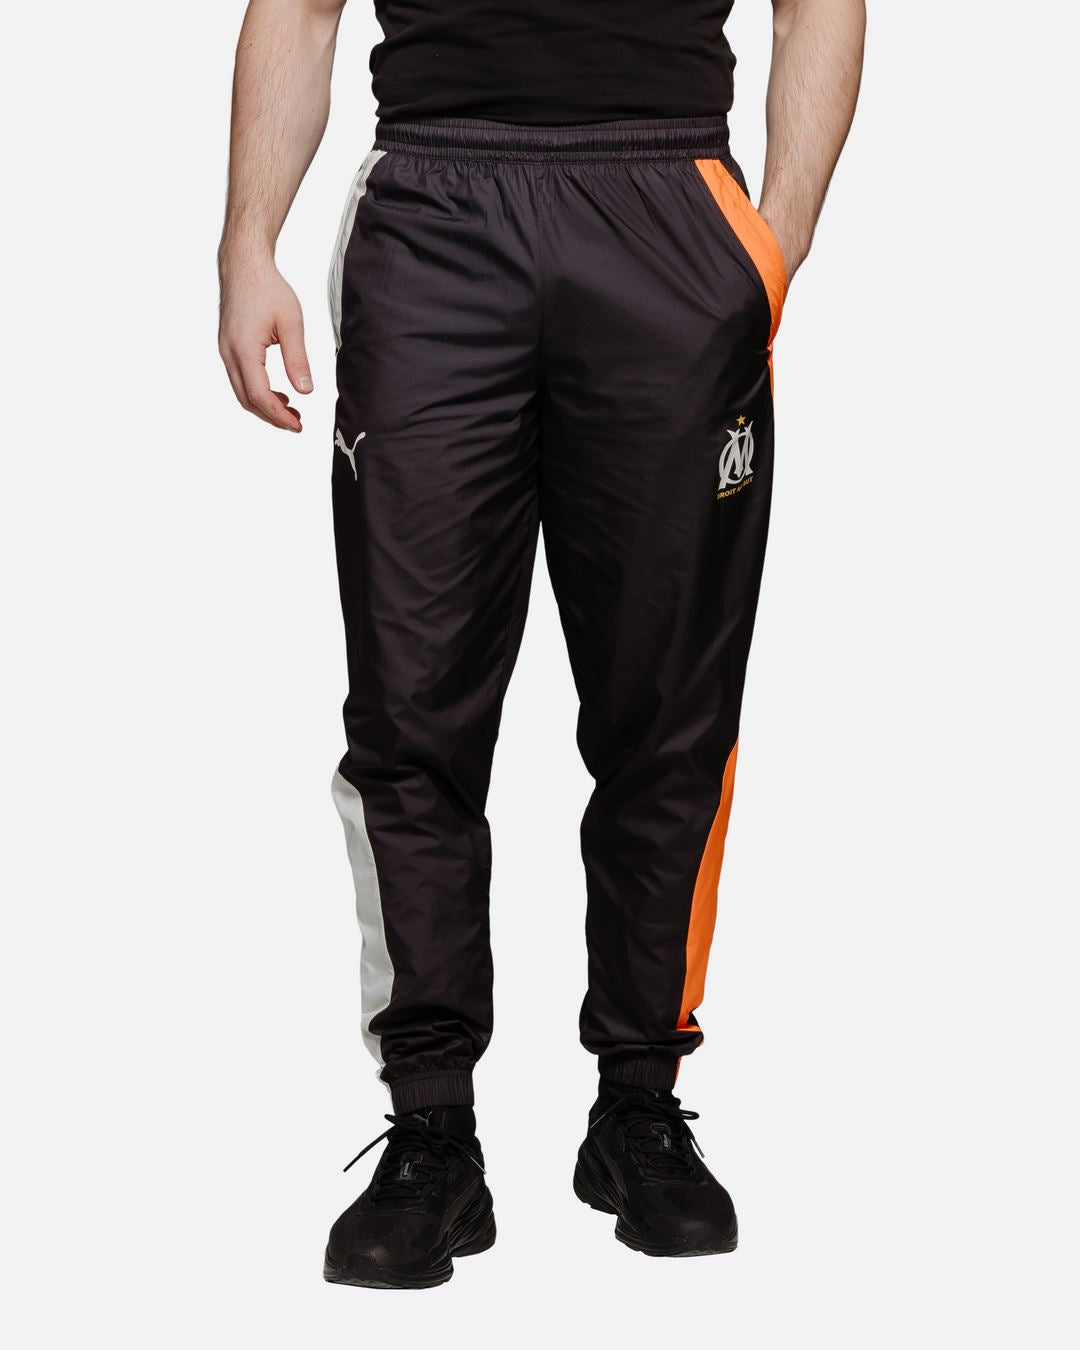 OM 2023/2024 Track Pants - Black/Orange